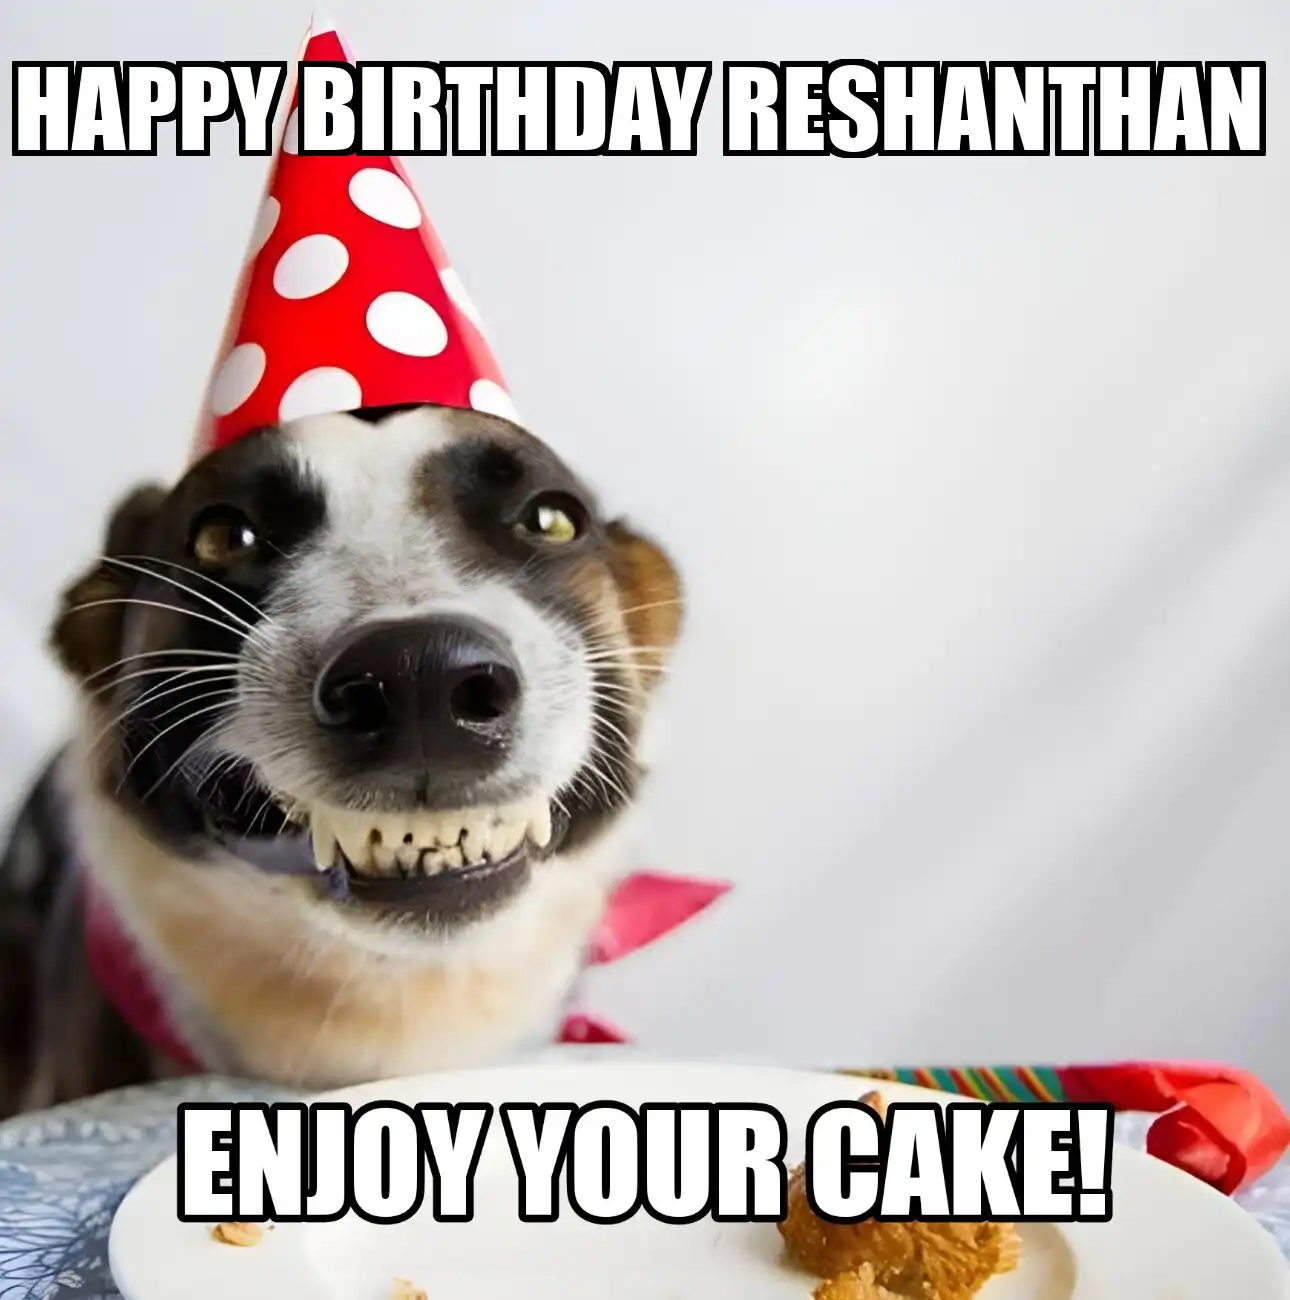 Happy Birthday Reshanthan Enjoy Your Cake Dog Meme